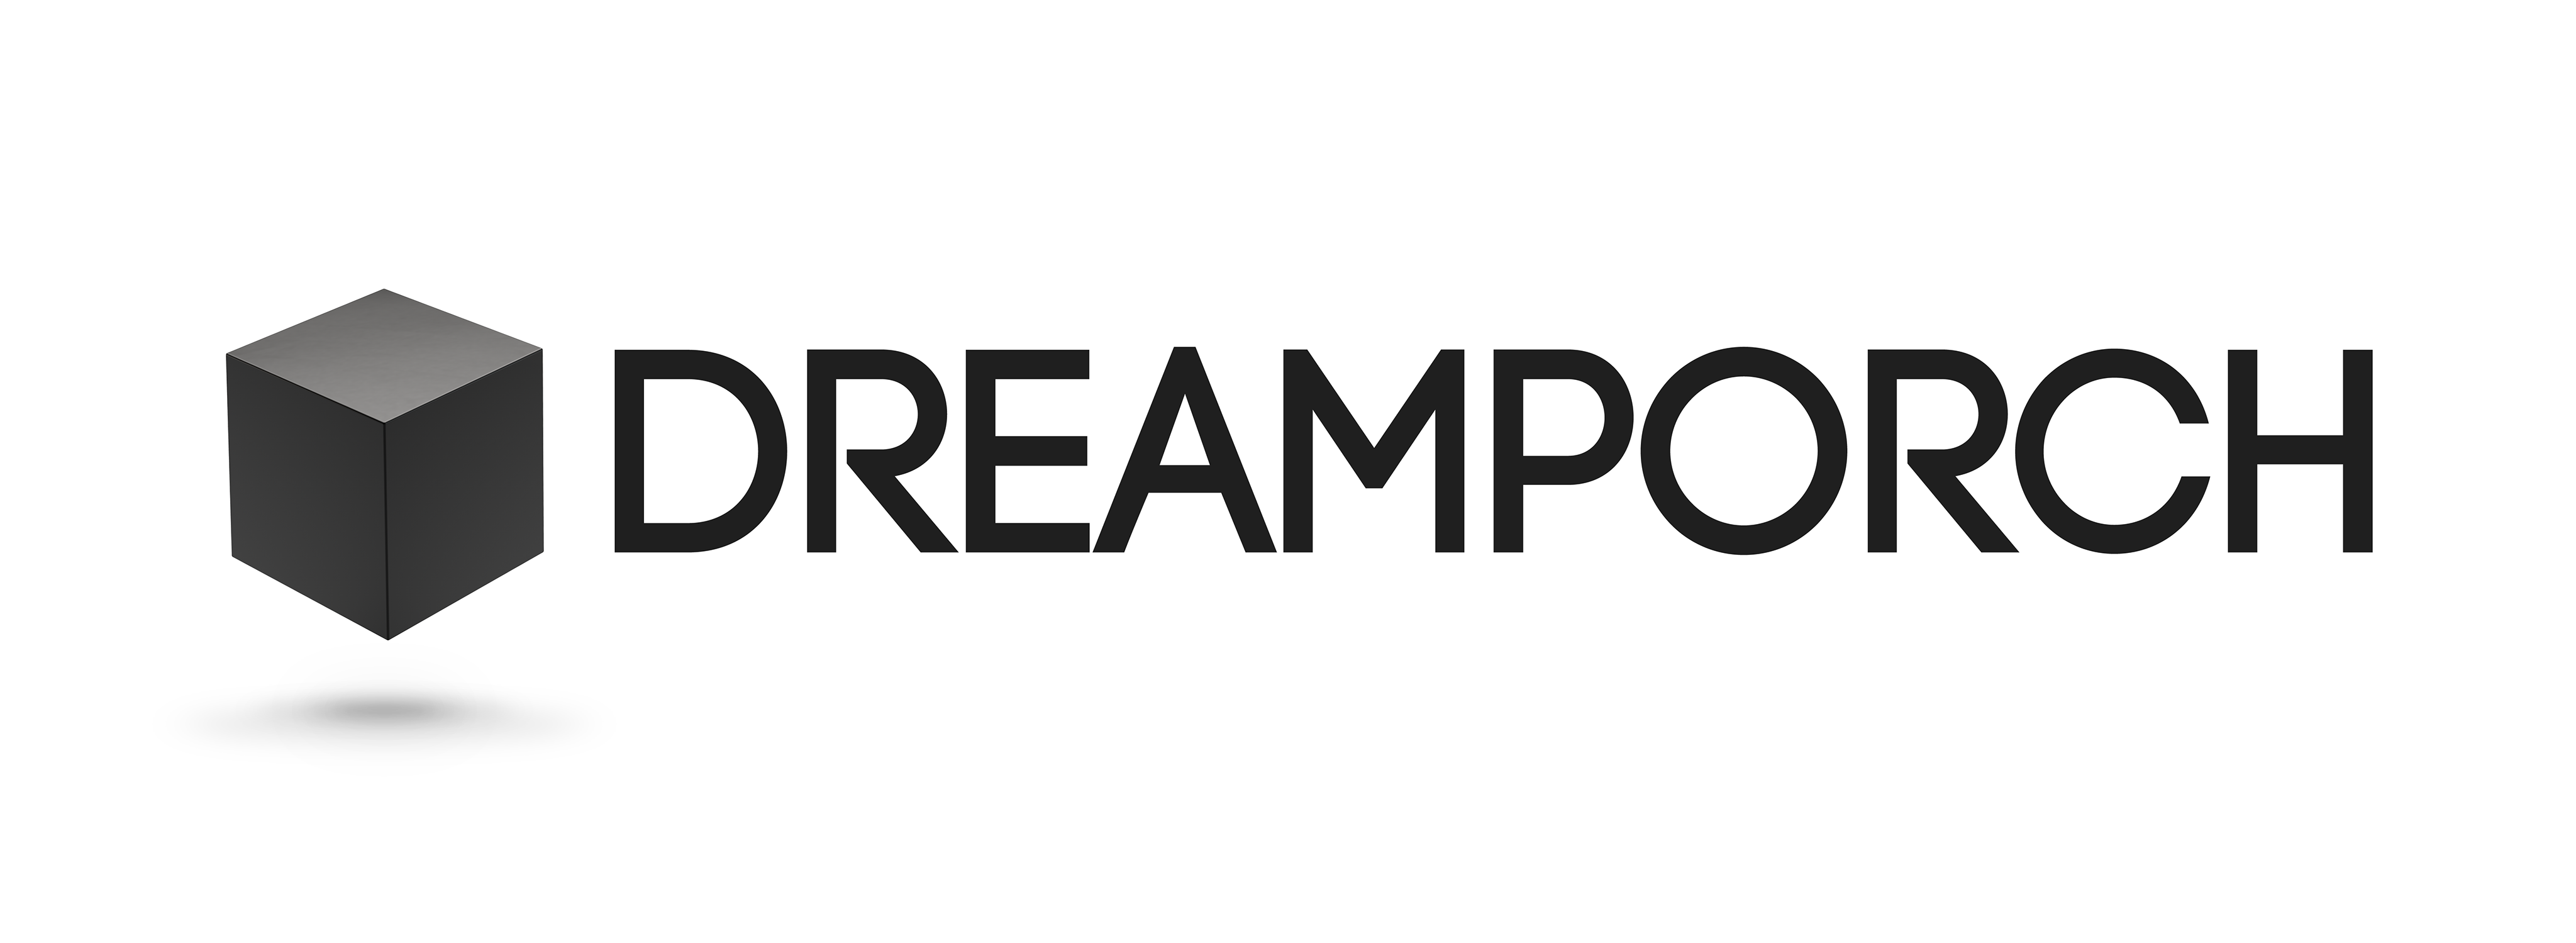 Dreamporch